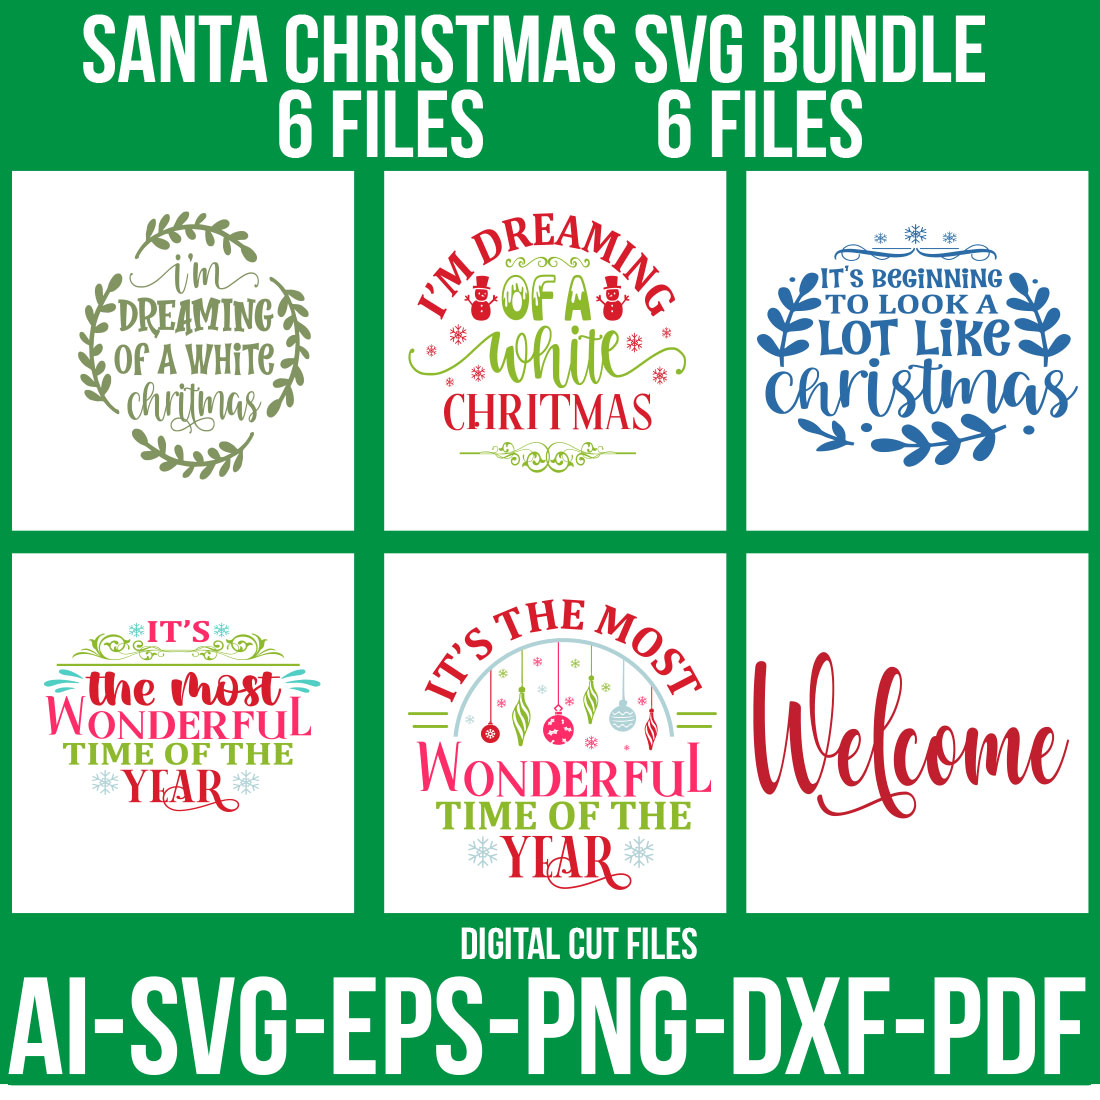 Santa Christmas SVG Bundle cover image.